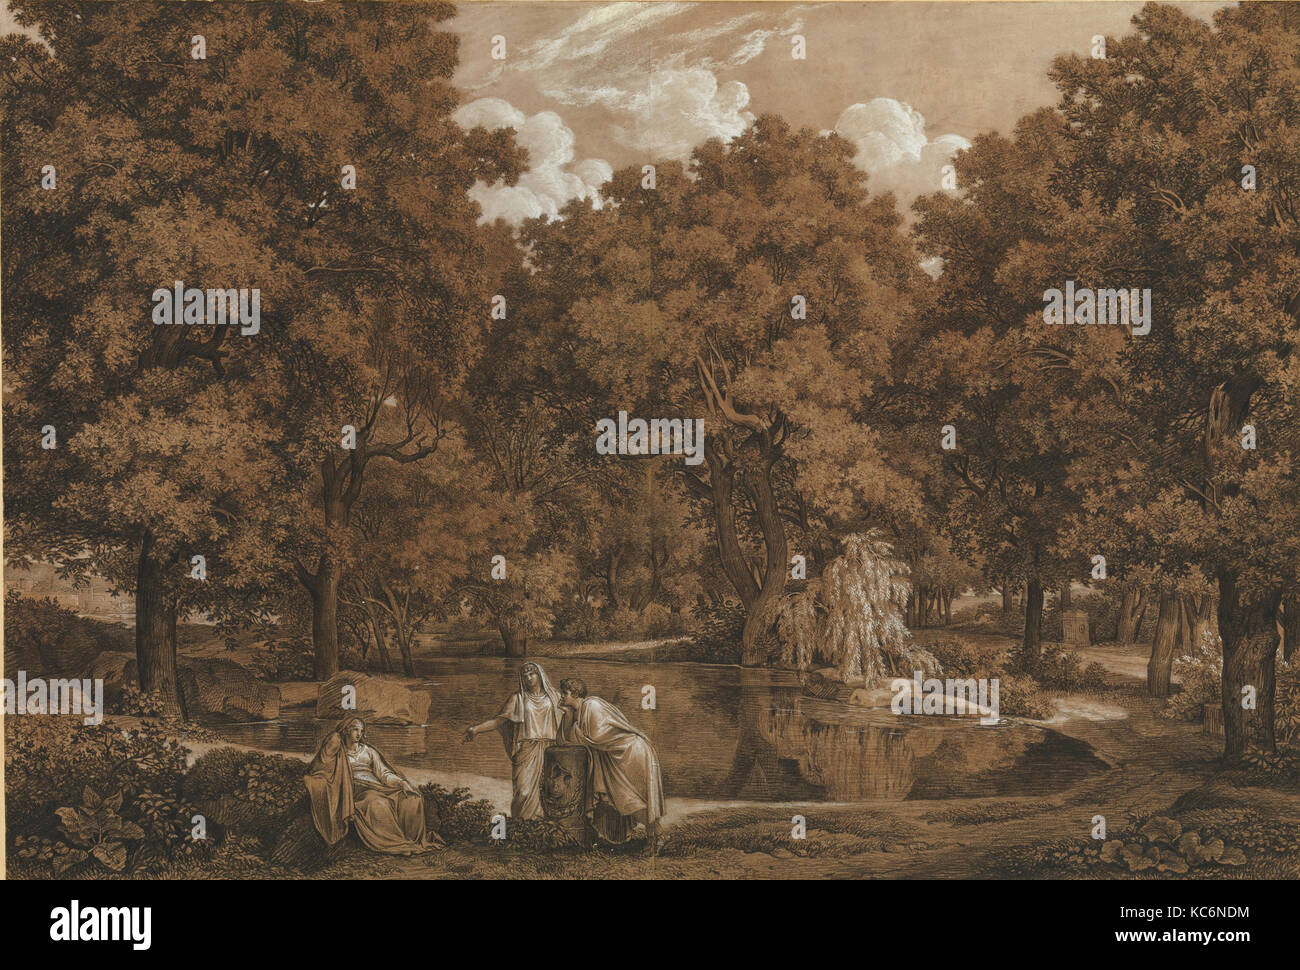 Arcadian Landscape with Three Figures at a Lake, Johann Christian Reinhart, 1792 Stock Photo